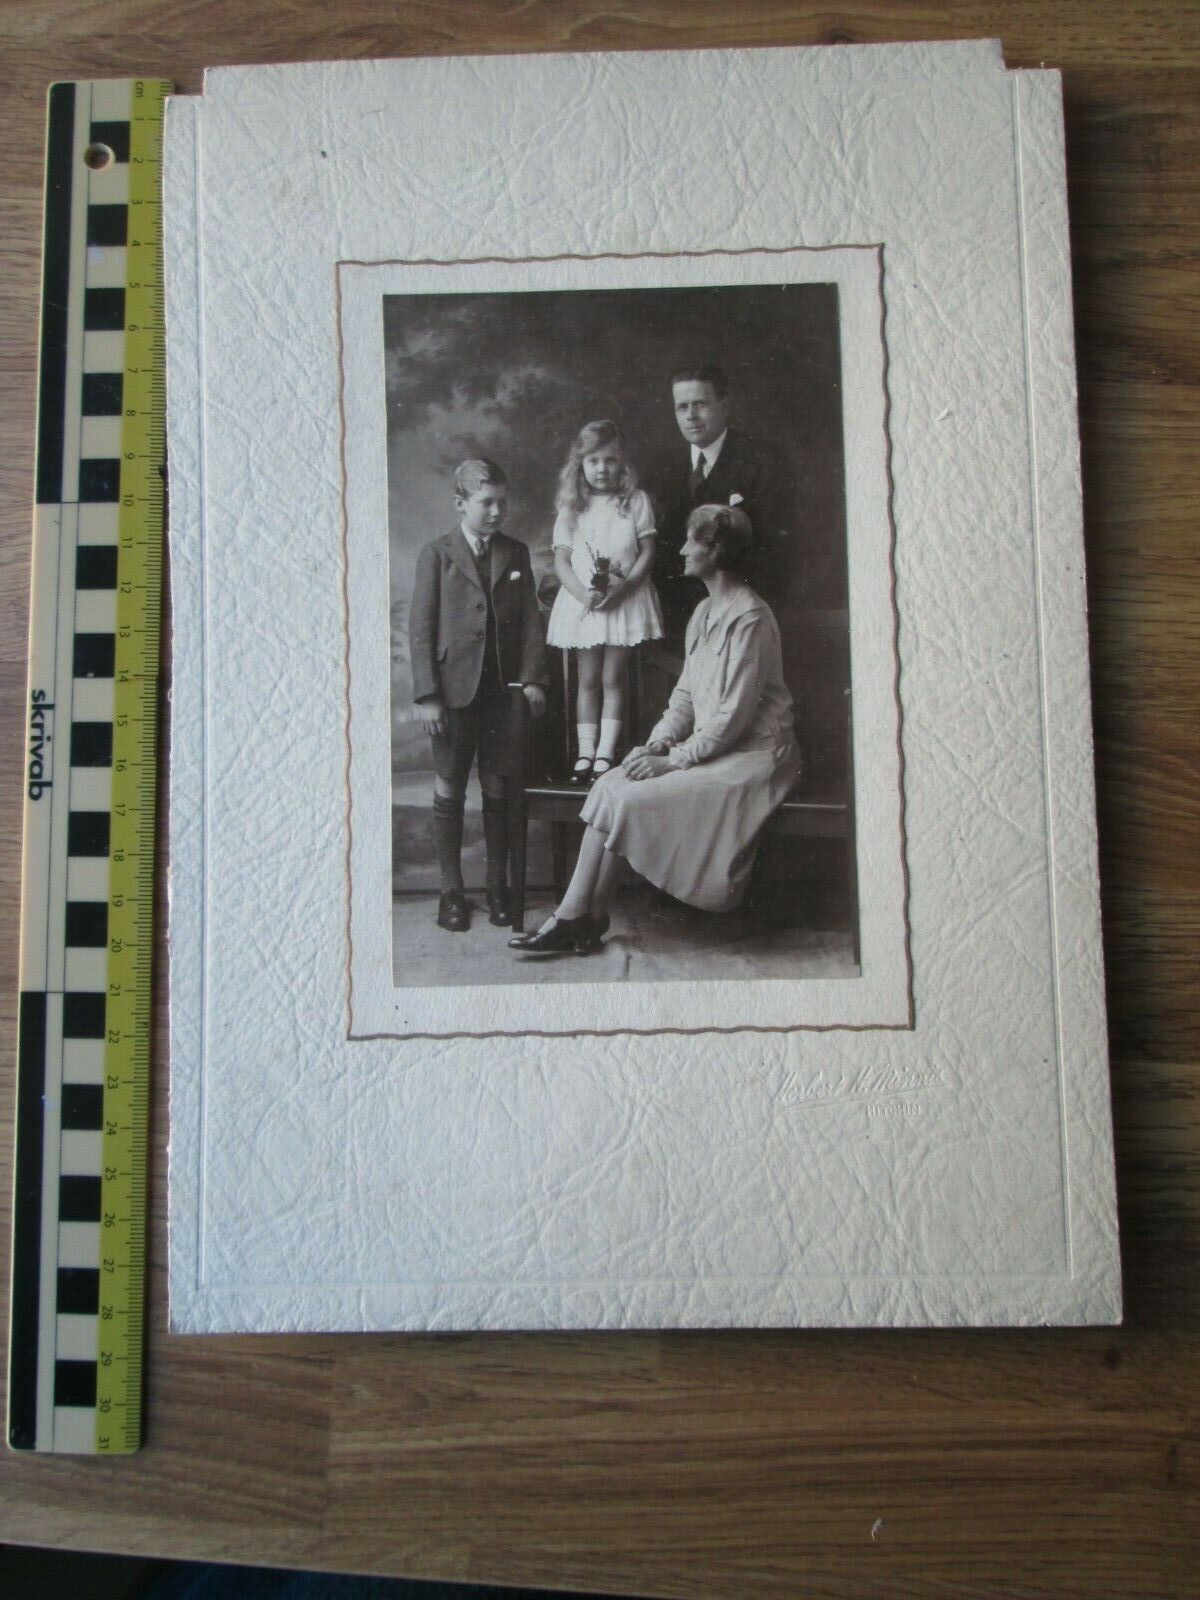 Herbert H Minnis, Hitchin, photographer - family Portrait 28 x 20 cm